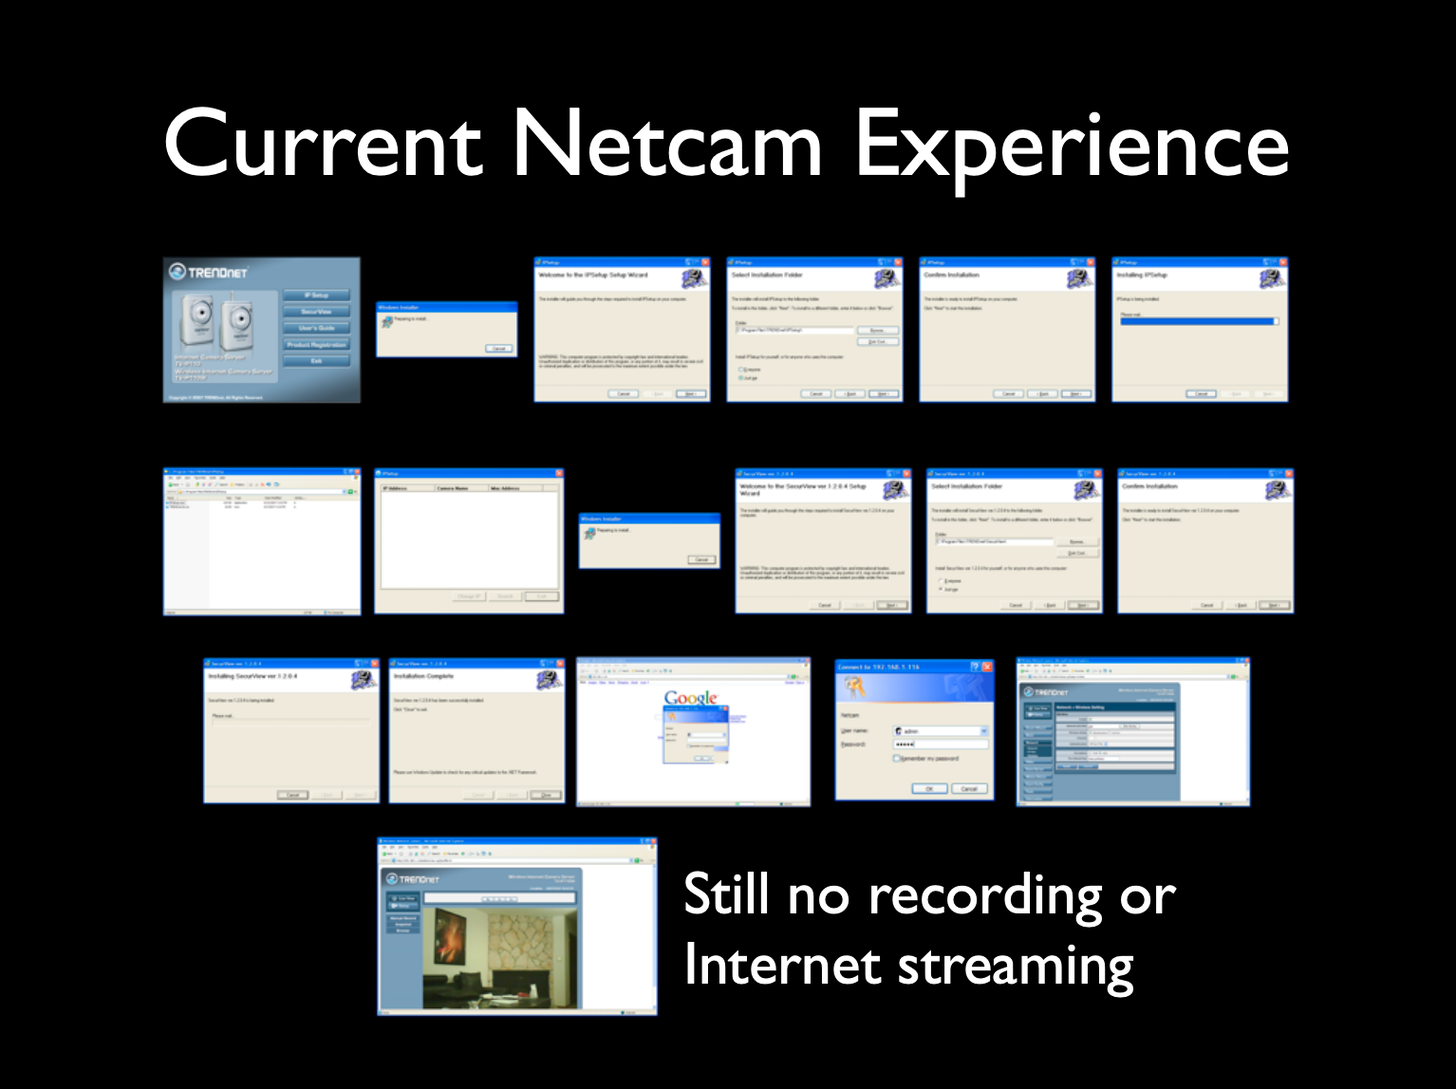 netcam experience 2009